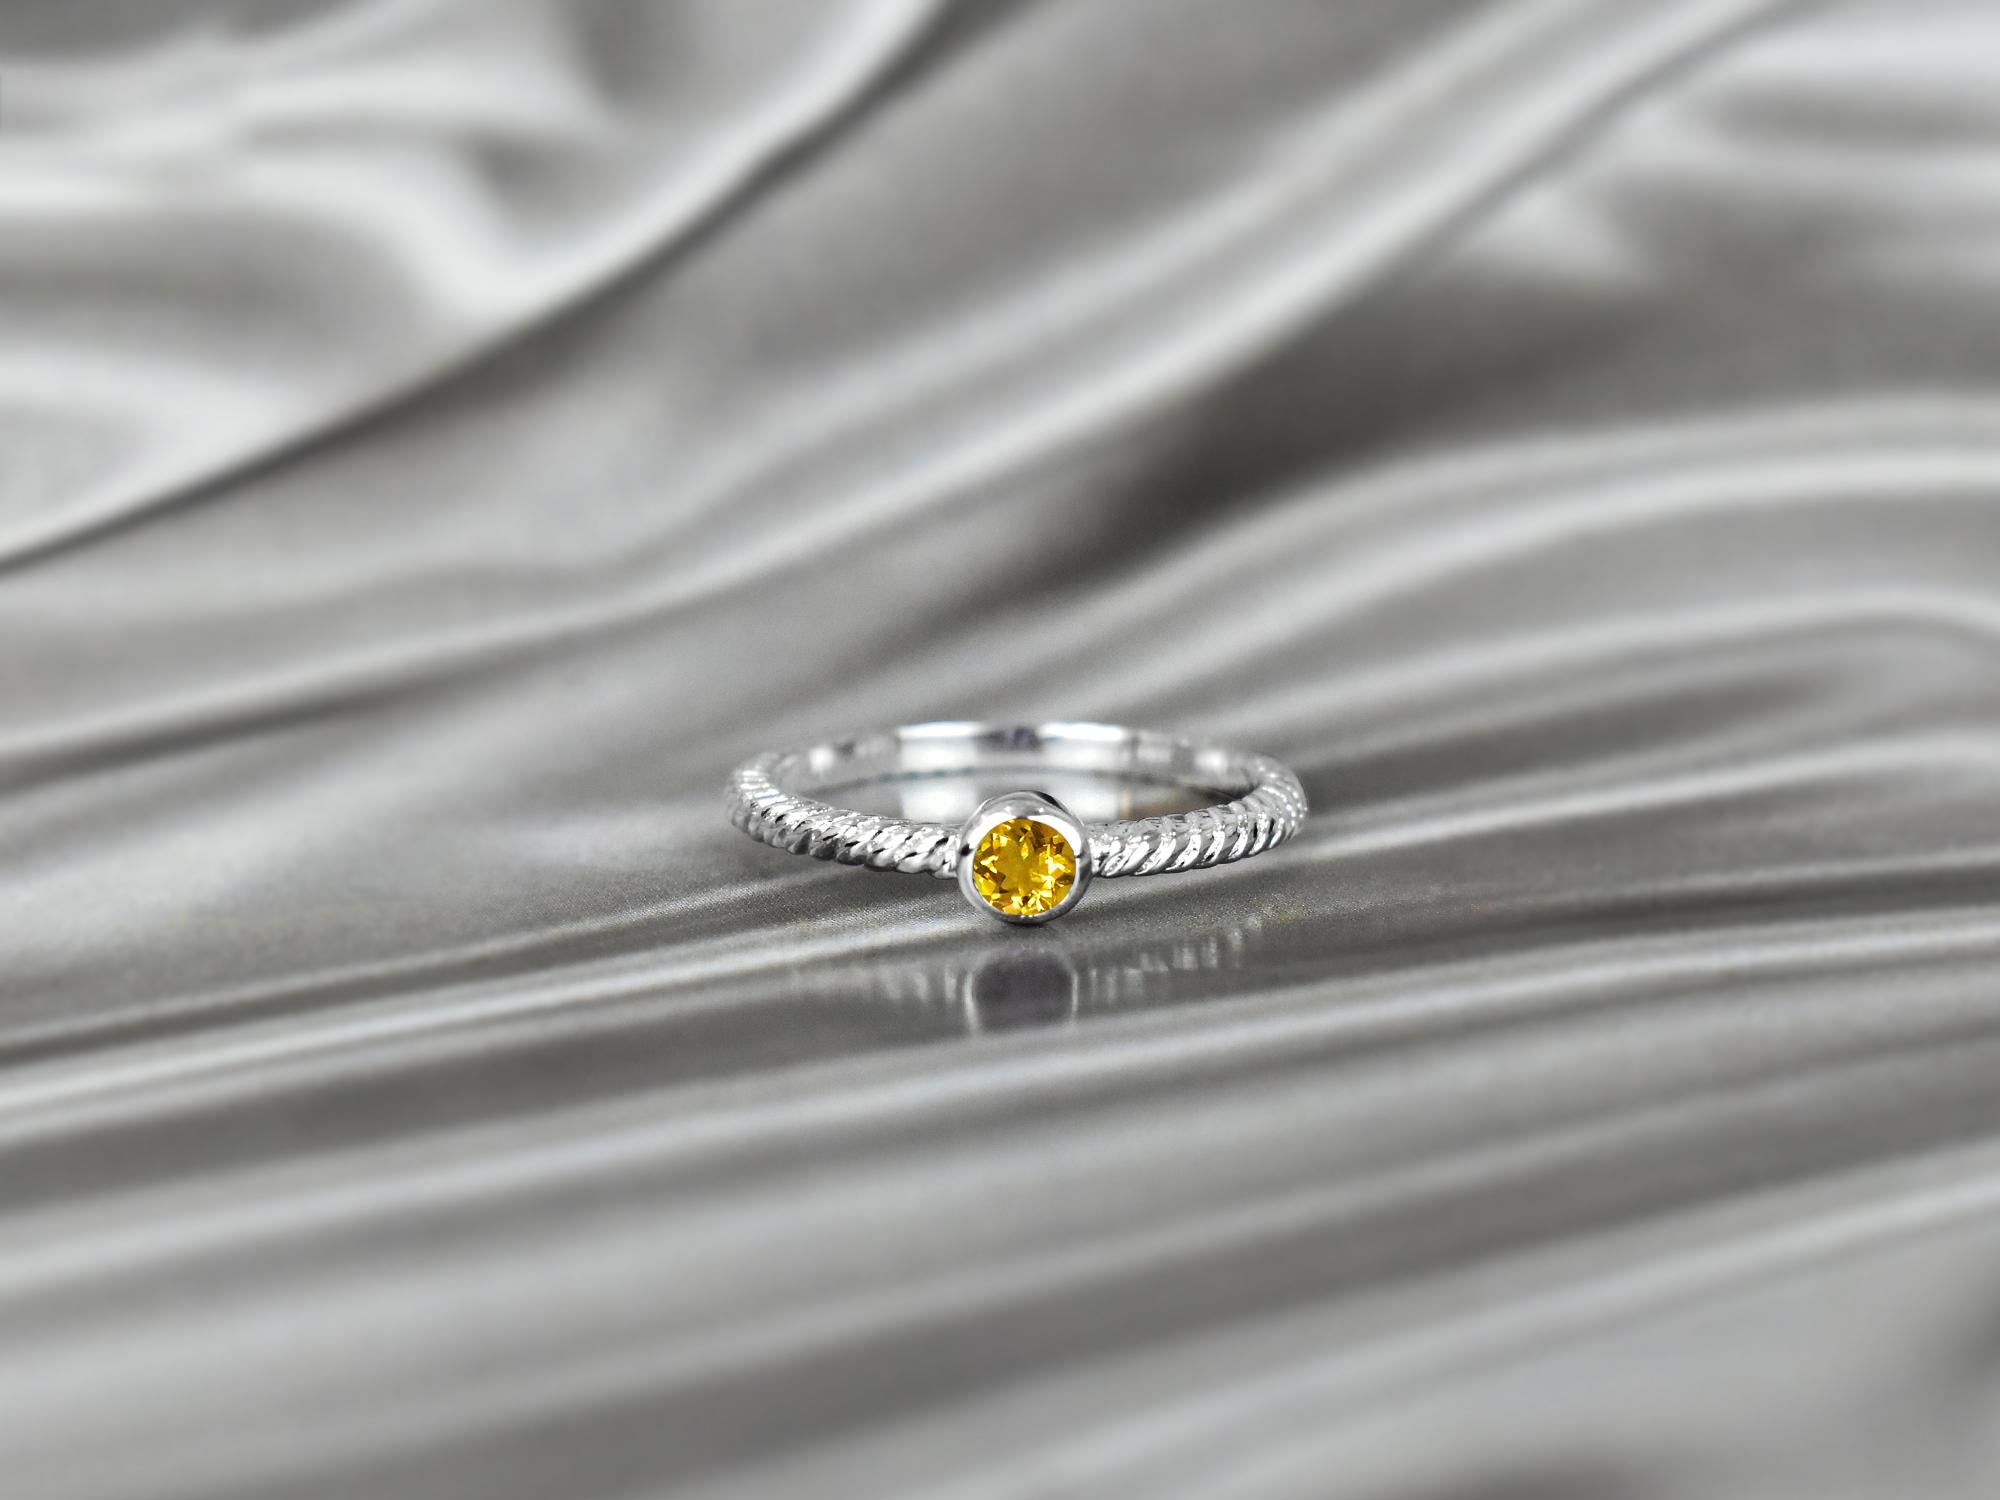 For Sale:  10k Gold Round Gemstone 3.5mm Round Gemstone Ring Birthstone Ring Stackable Ring 6